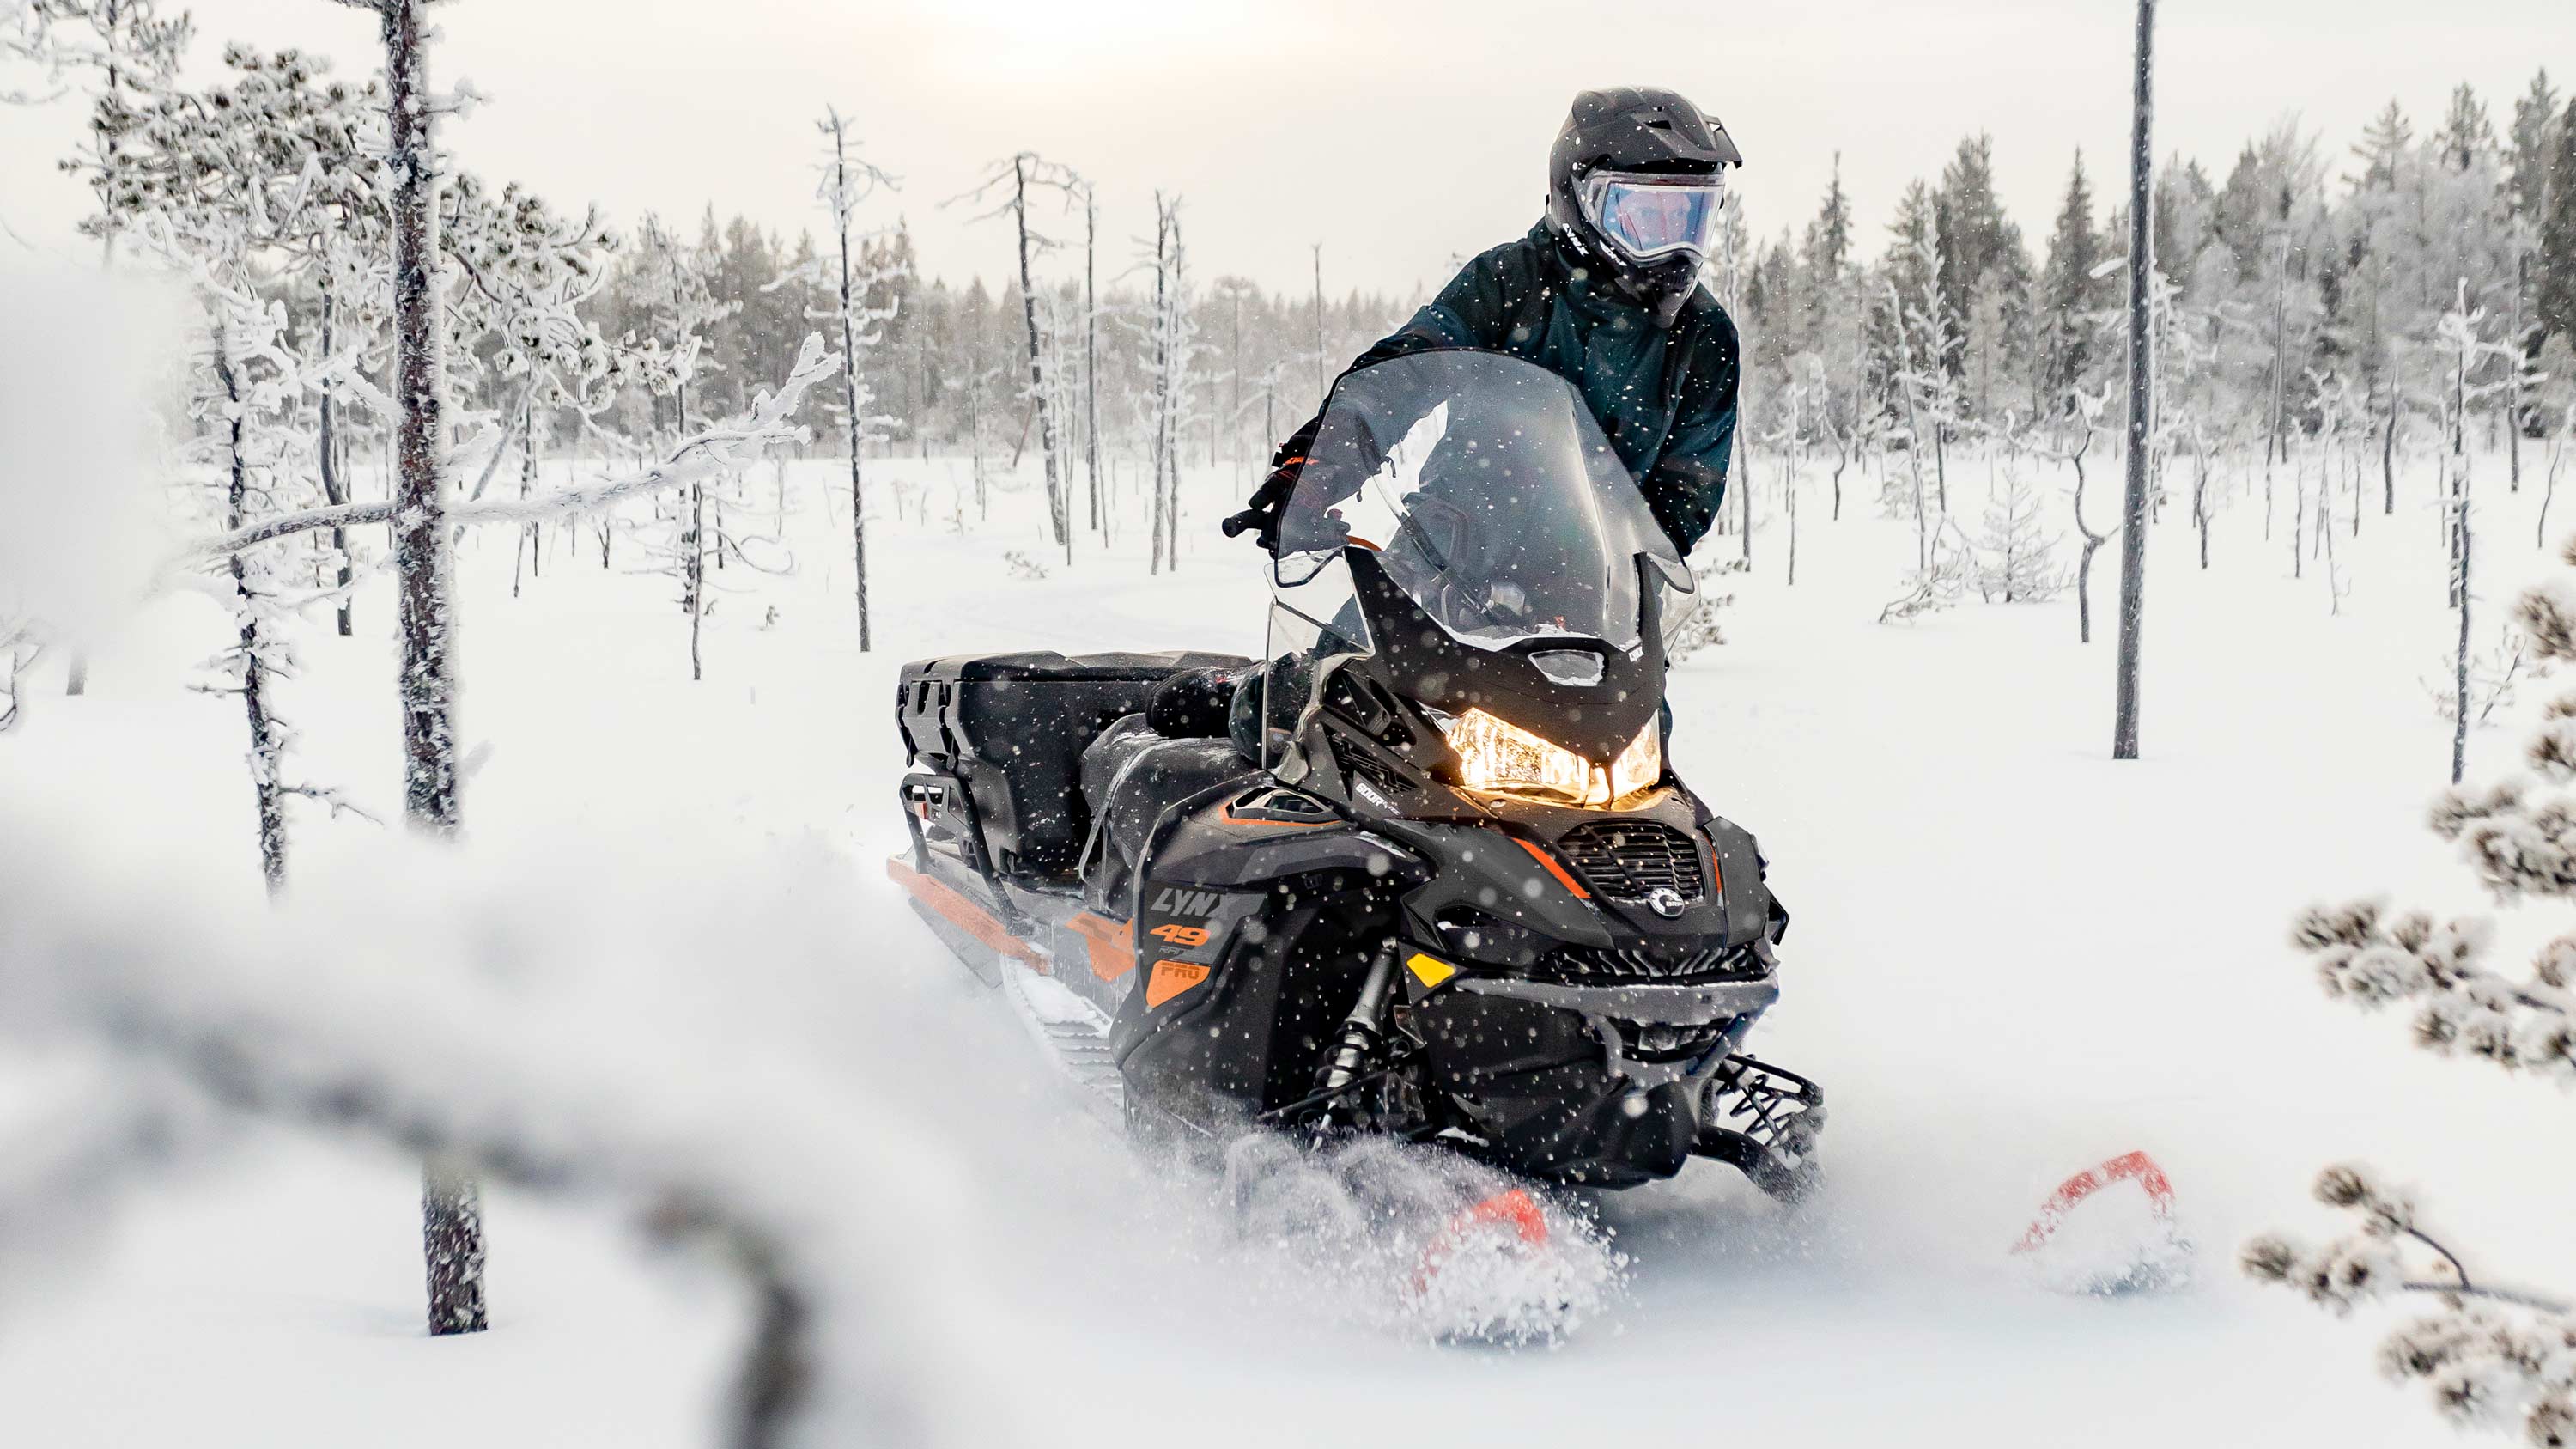 Lynx 49 Ranger Pro snowmobile riding in powder snow